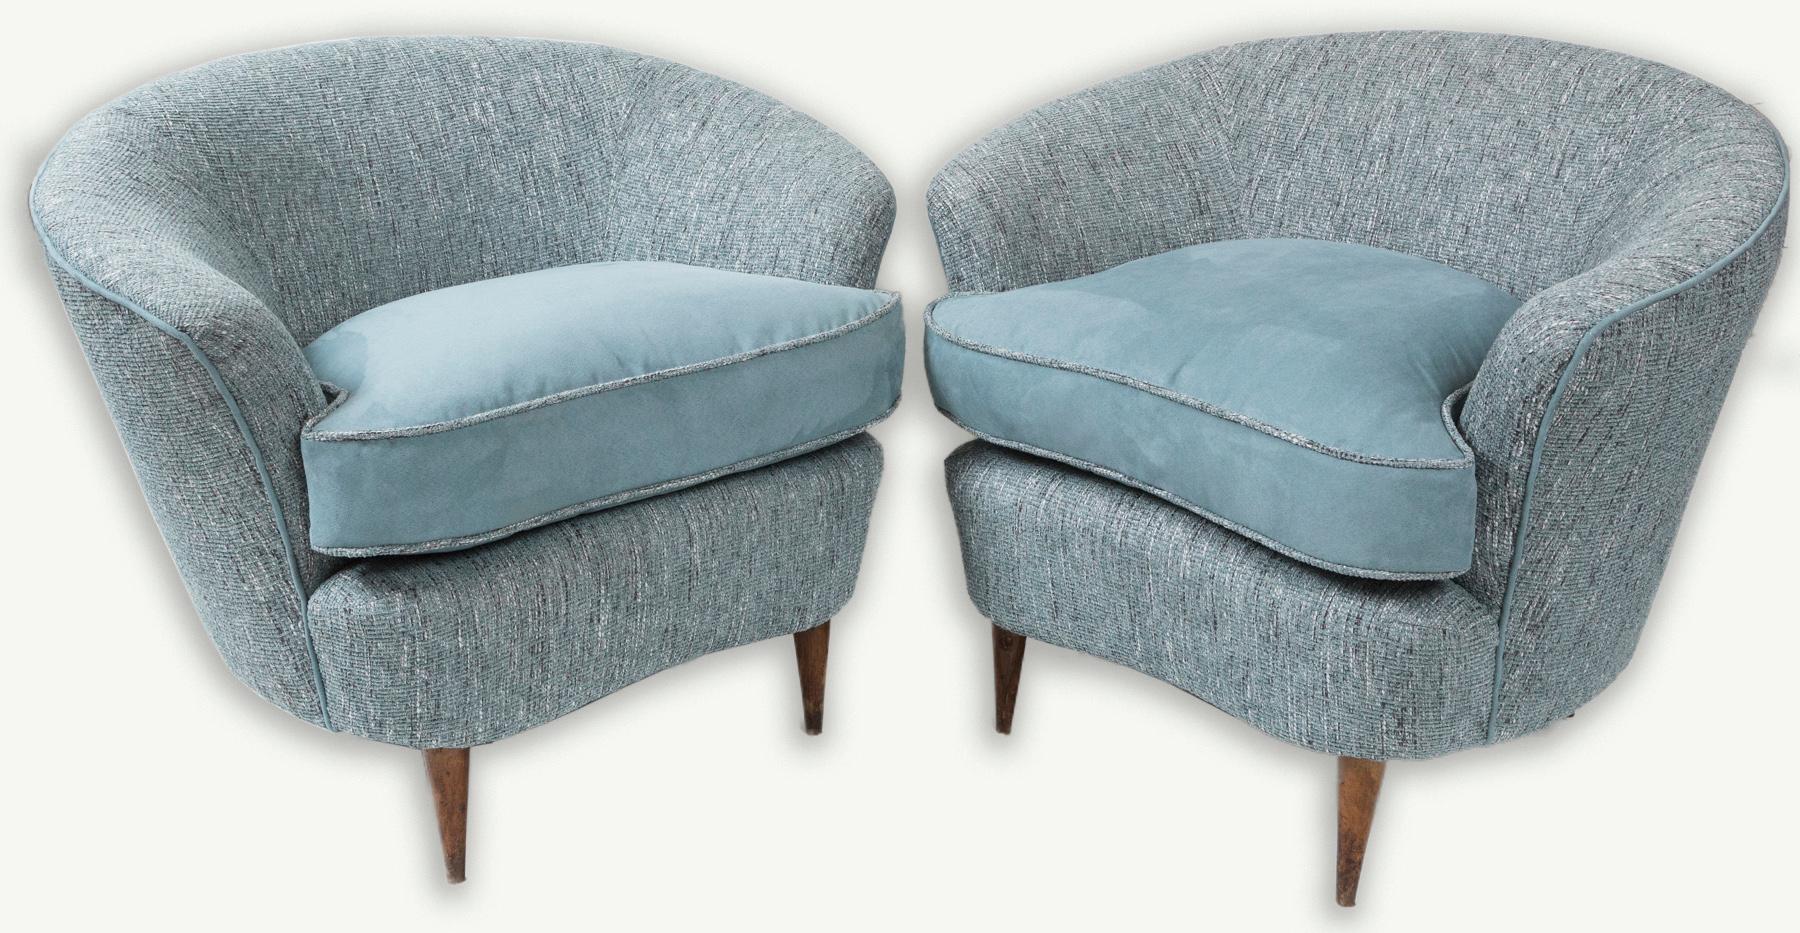 Pair of Midcentury Italian Gio Ponti Style Tub Chairs, Attr. Casa E Giardino For Sale 6